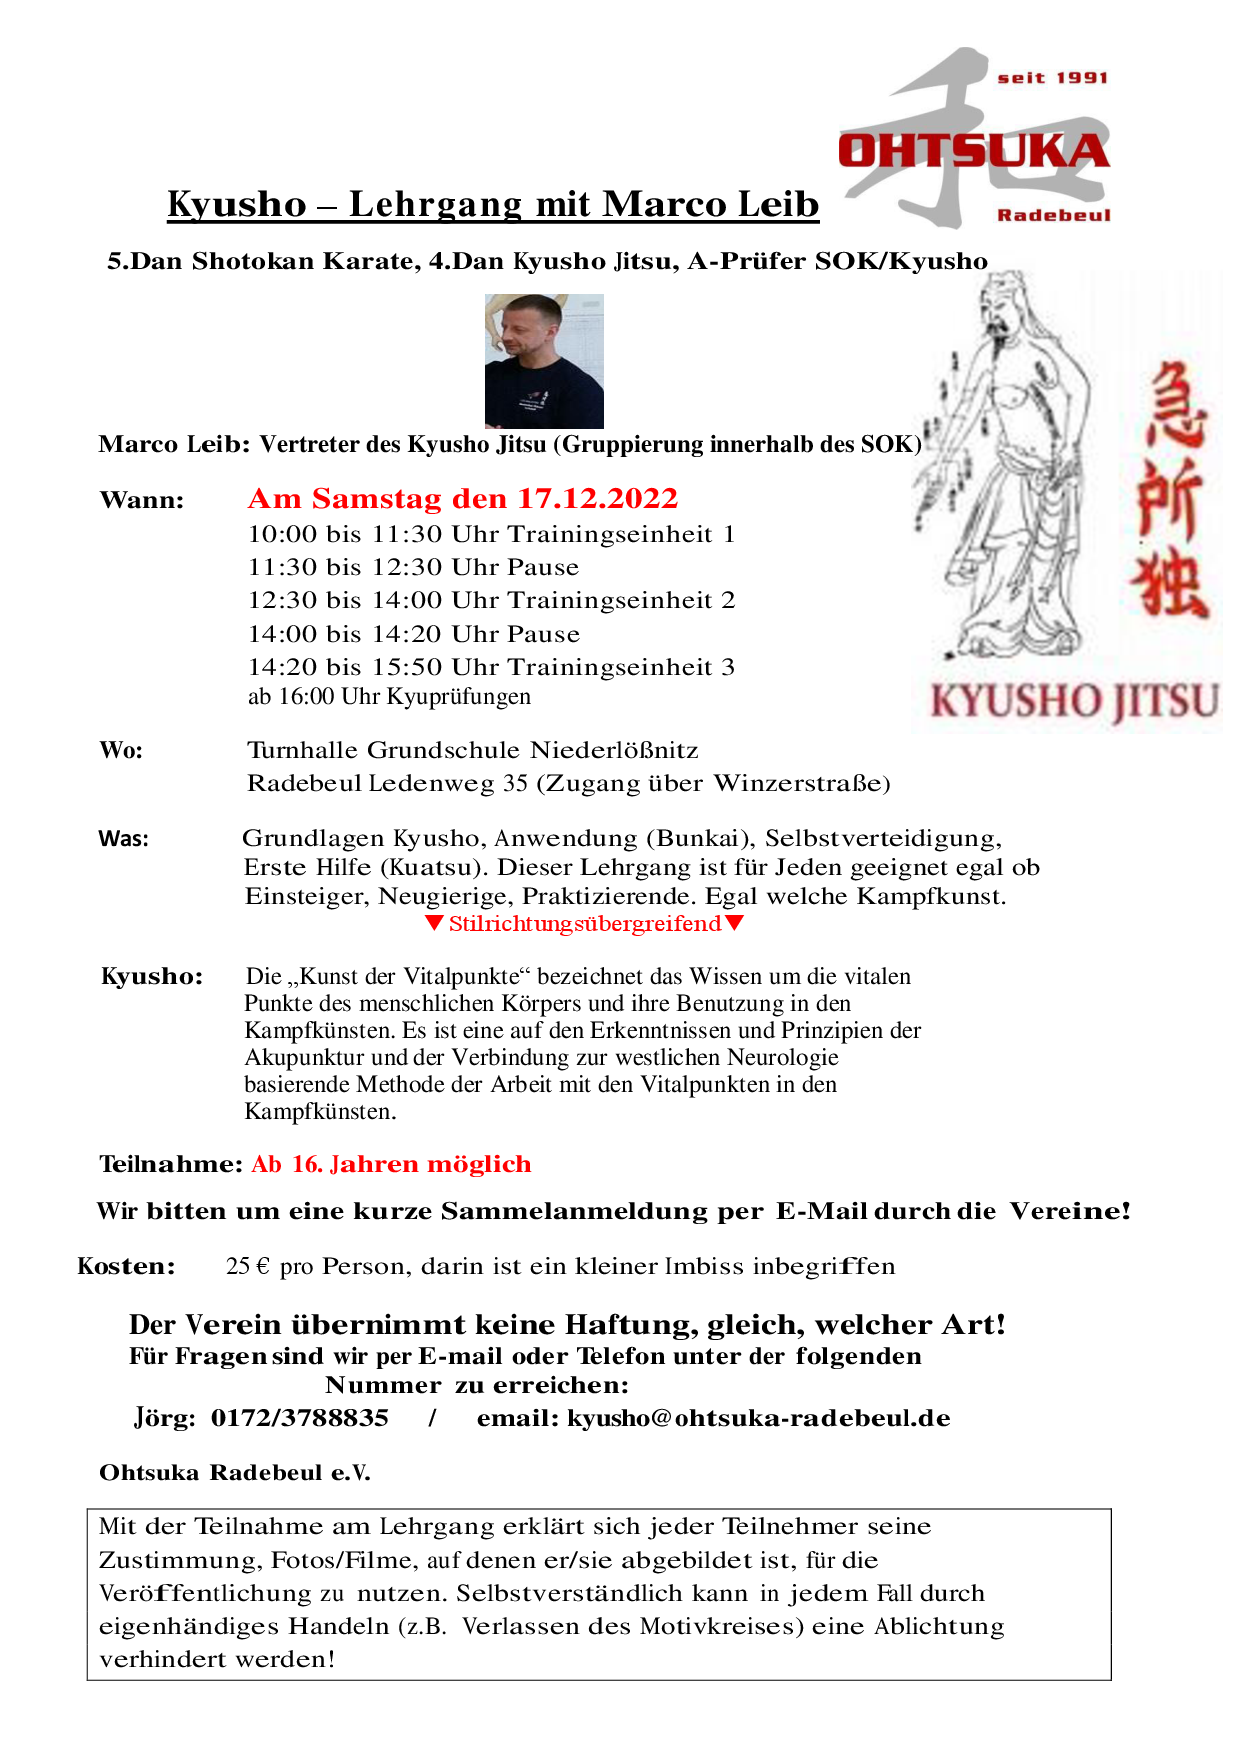 Kyusho Lehrgang in Radebeul 17.12.2022